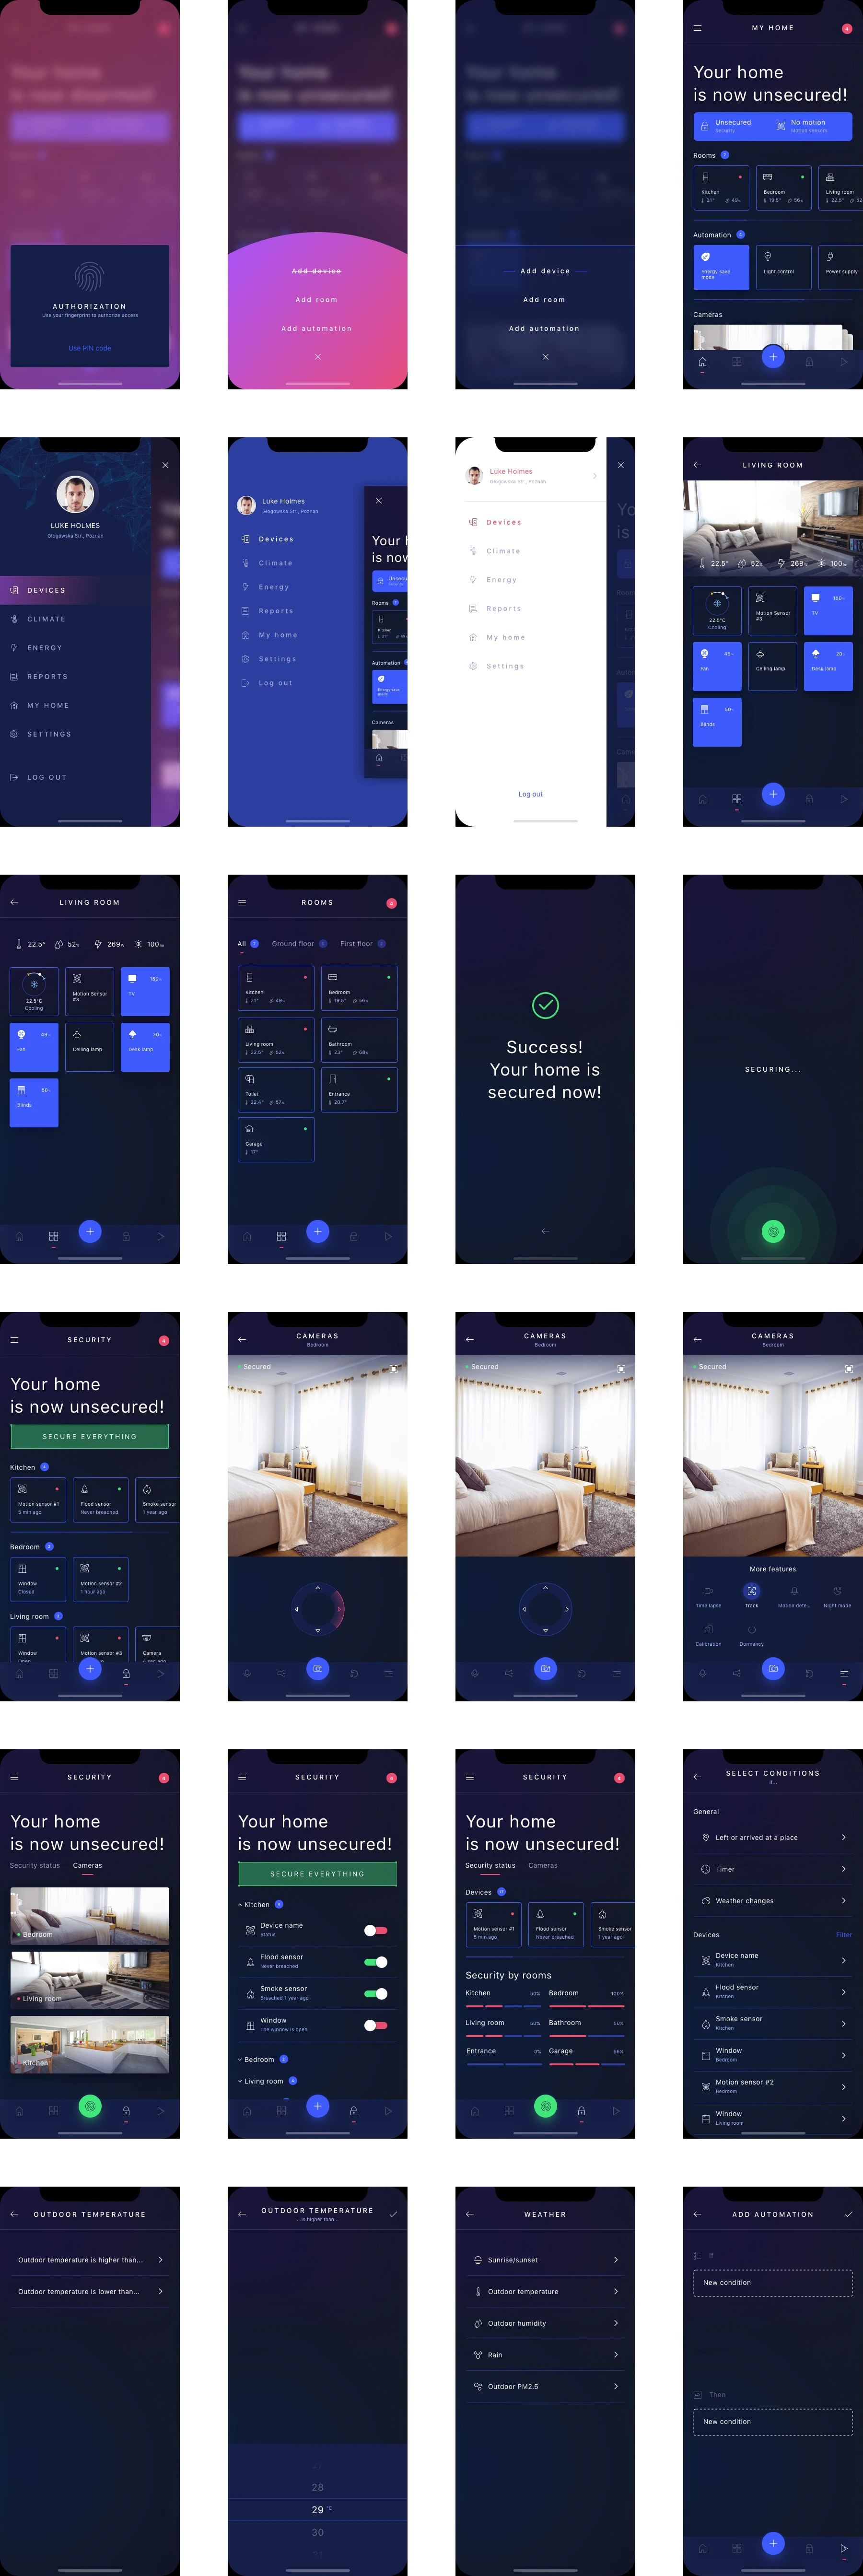 HIVO Smart Home UI Kit - 62 carefully designed mobile screens to kickstart your project.